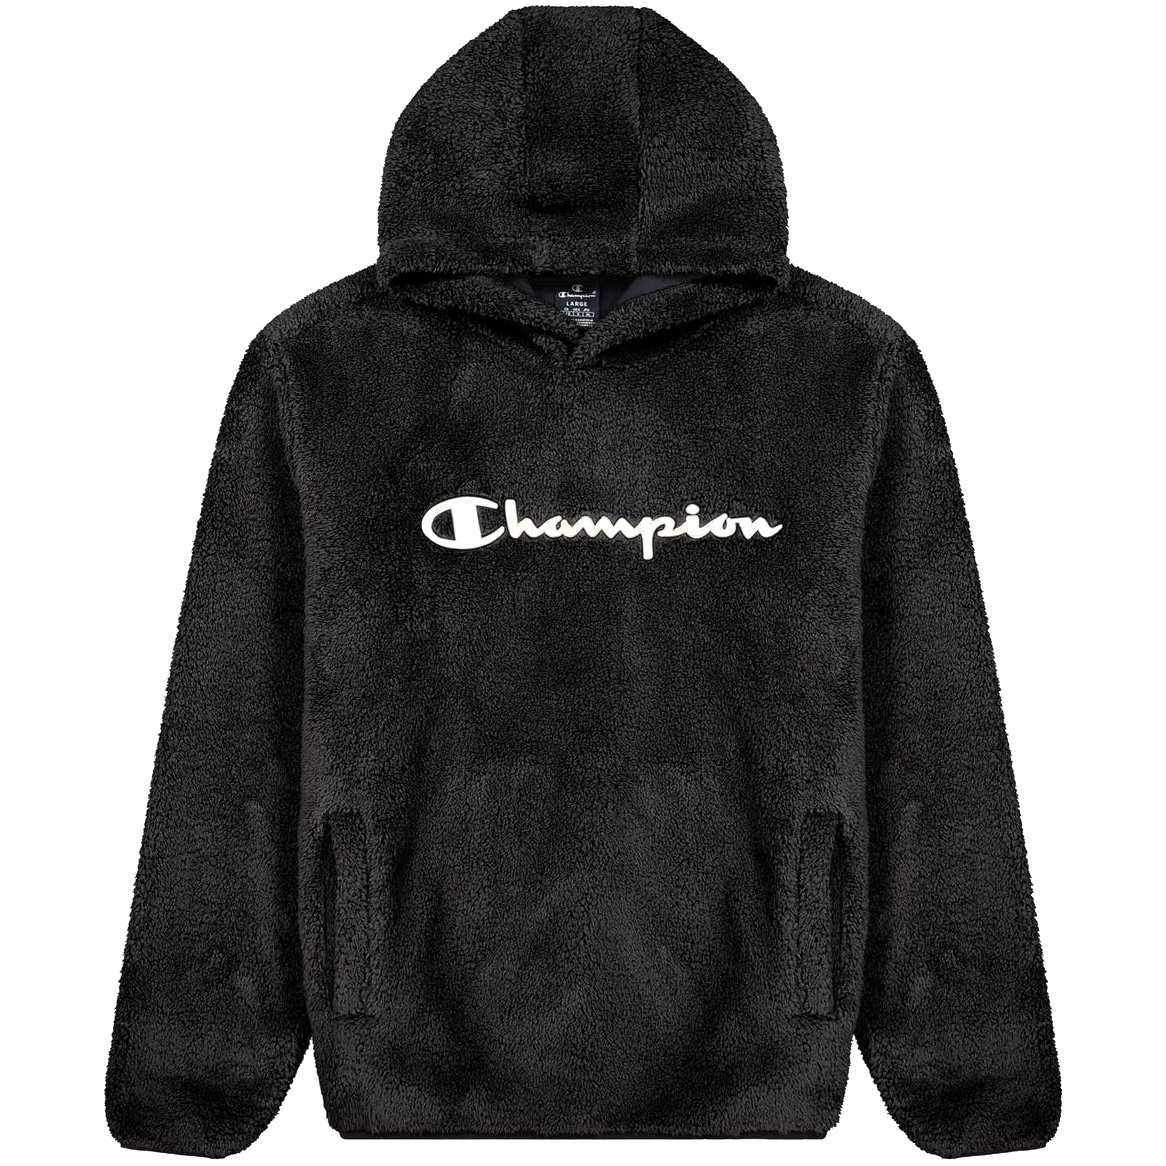 Champion Kapuzen Sweatshirt schwarz S